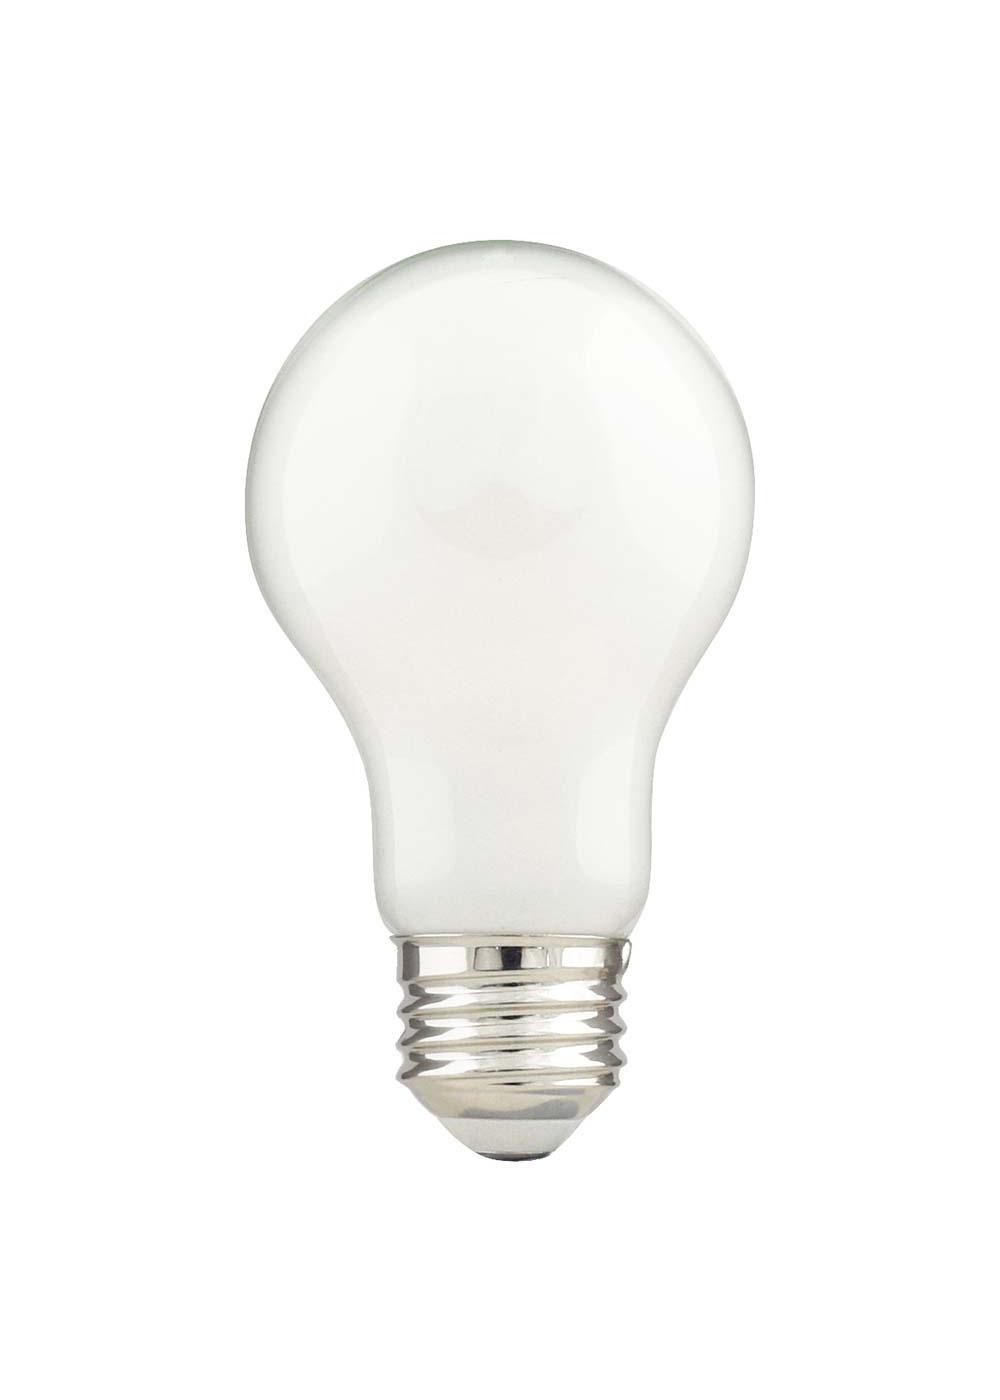 Green Watt A19 100-Watt Frosted LED Light Bulbs - Daylight; image 3 of 3